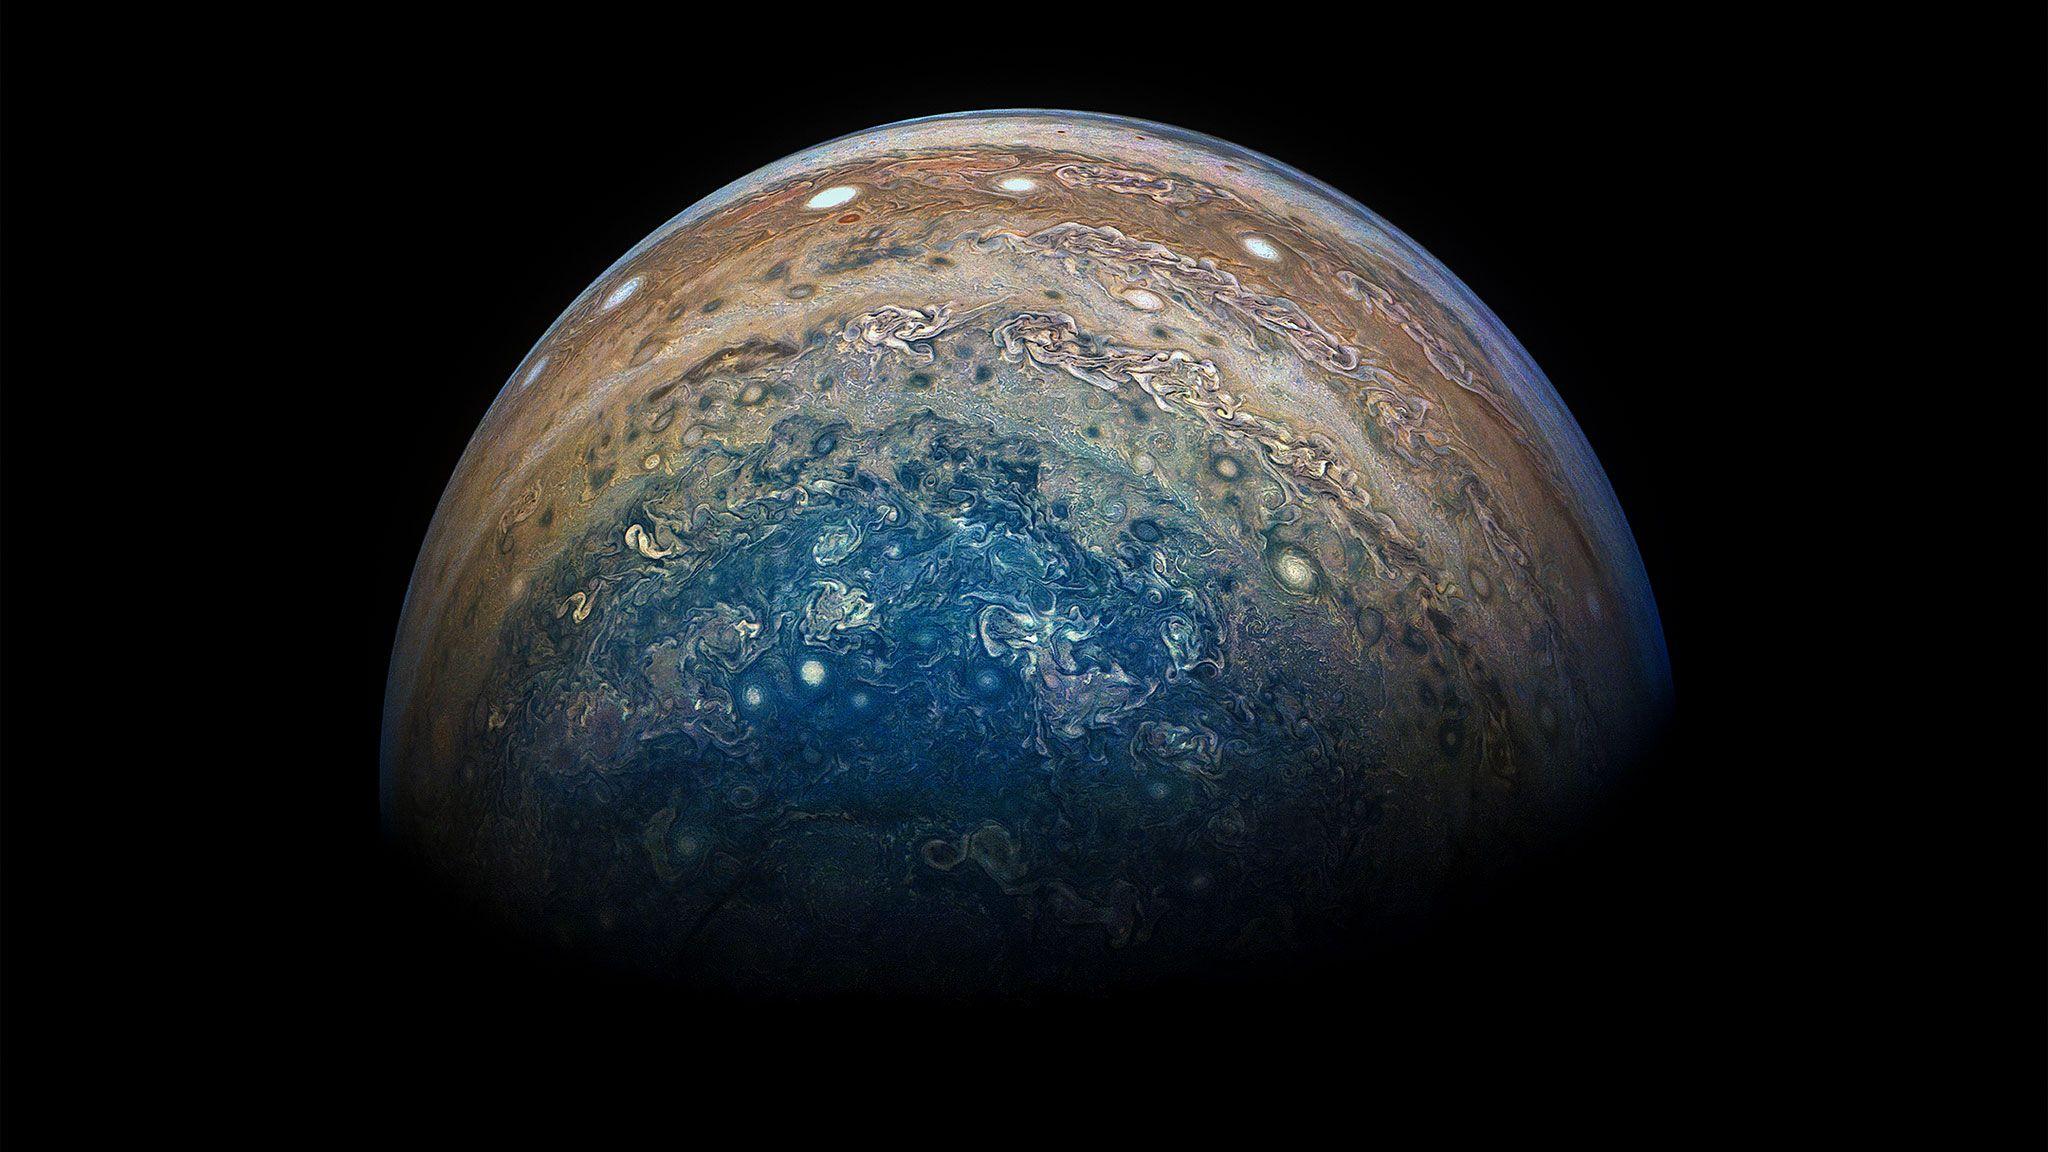 Juno spacecraft takes spectacular new image of Jupiter